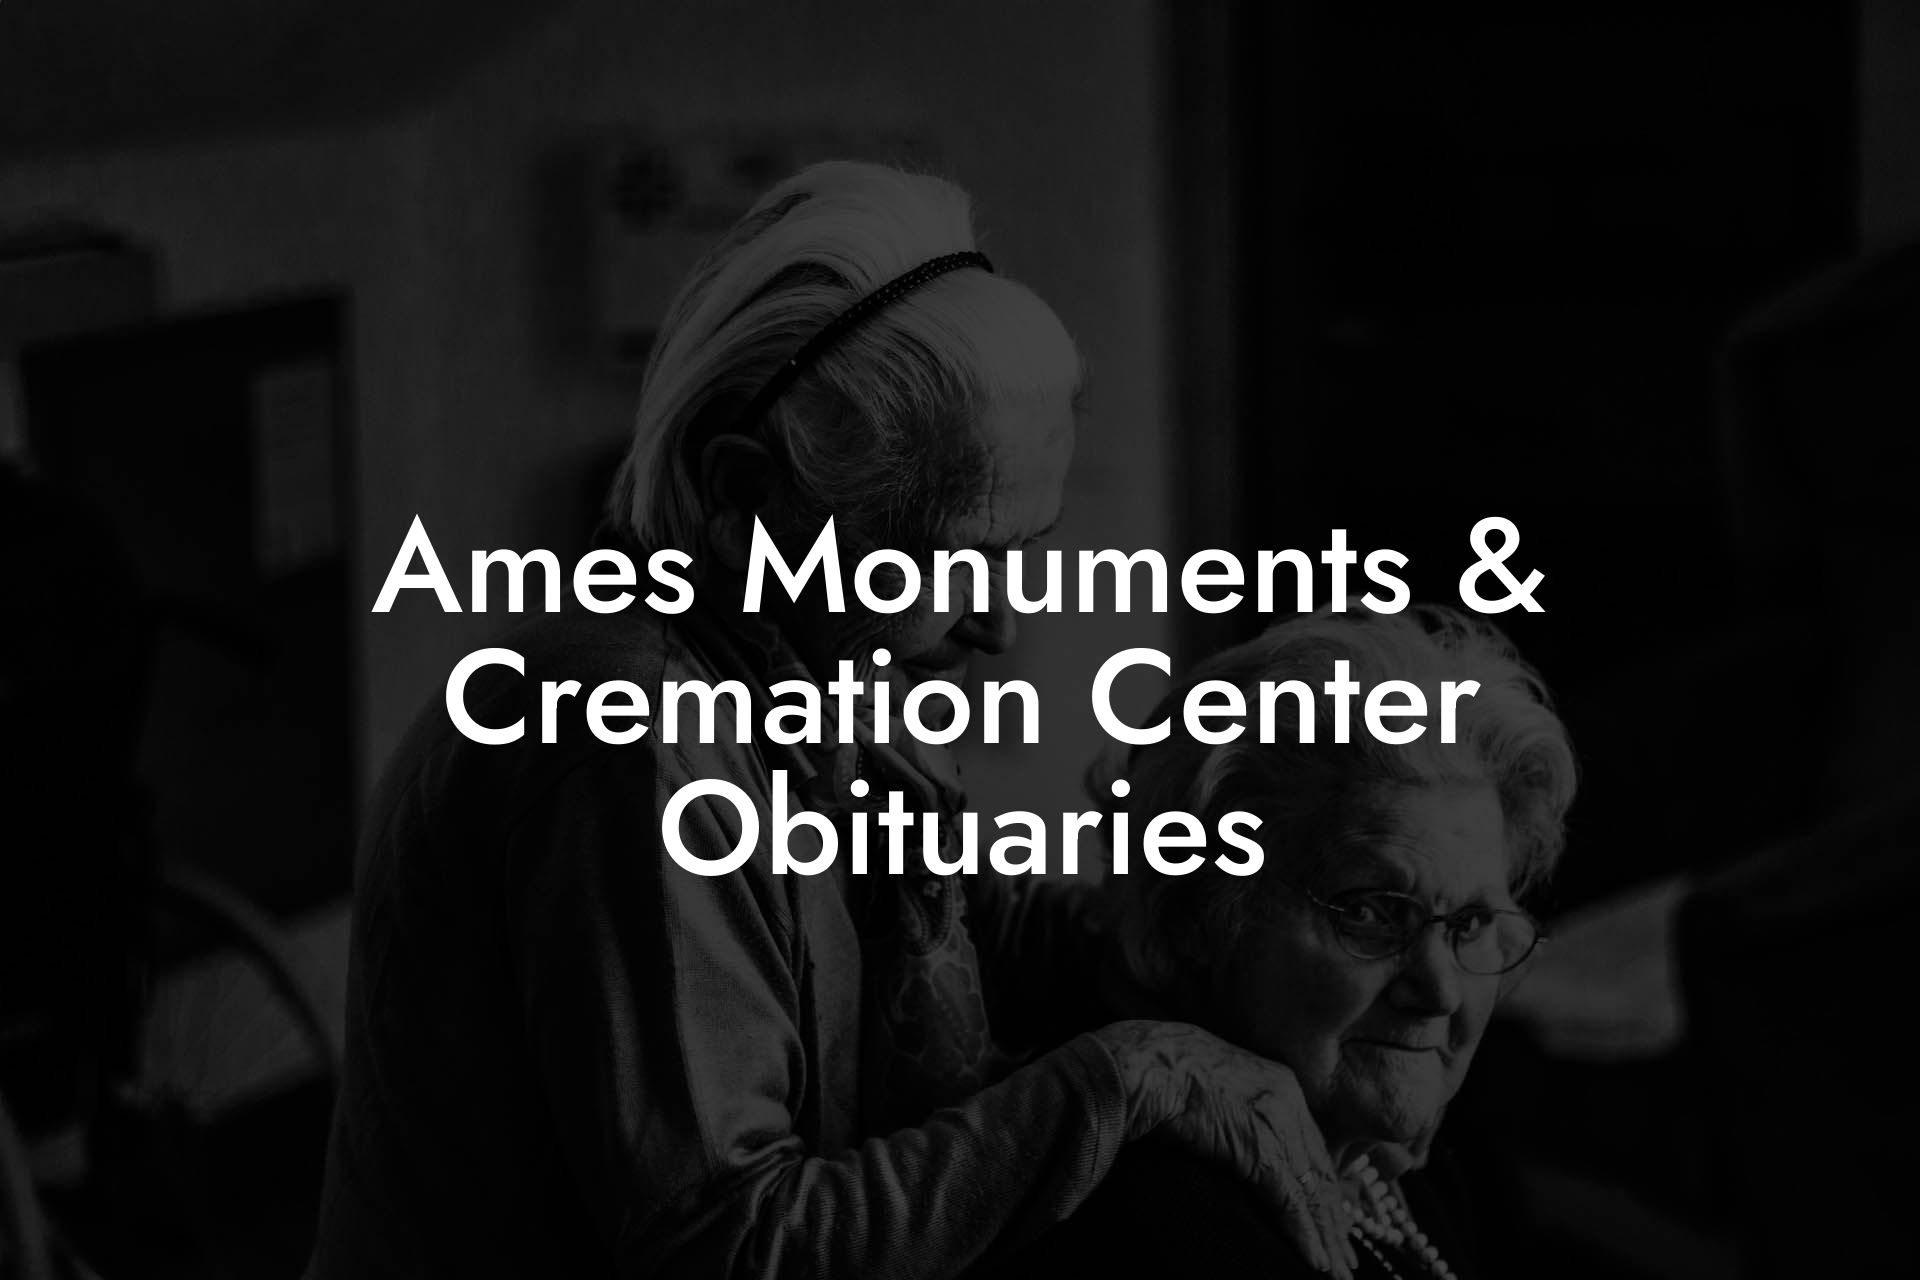 Ames Monuments & Cremation Center Obituaries